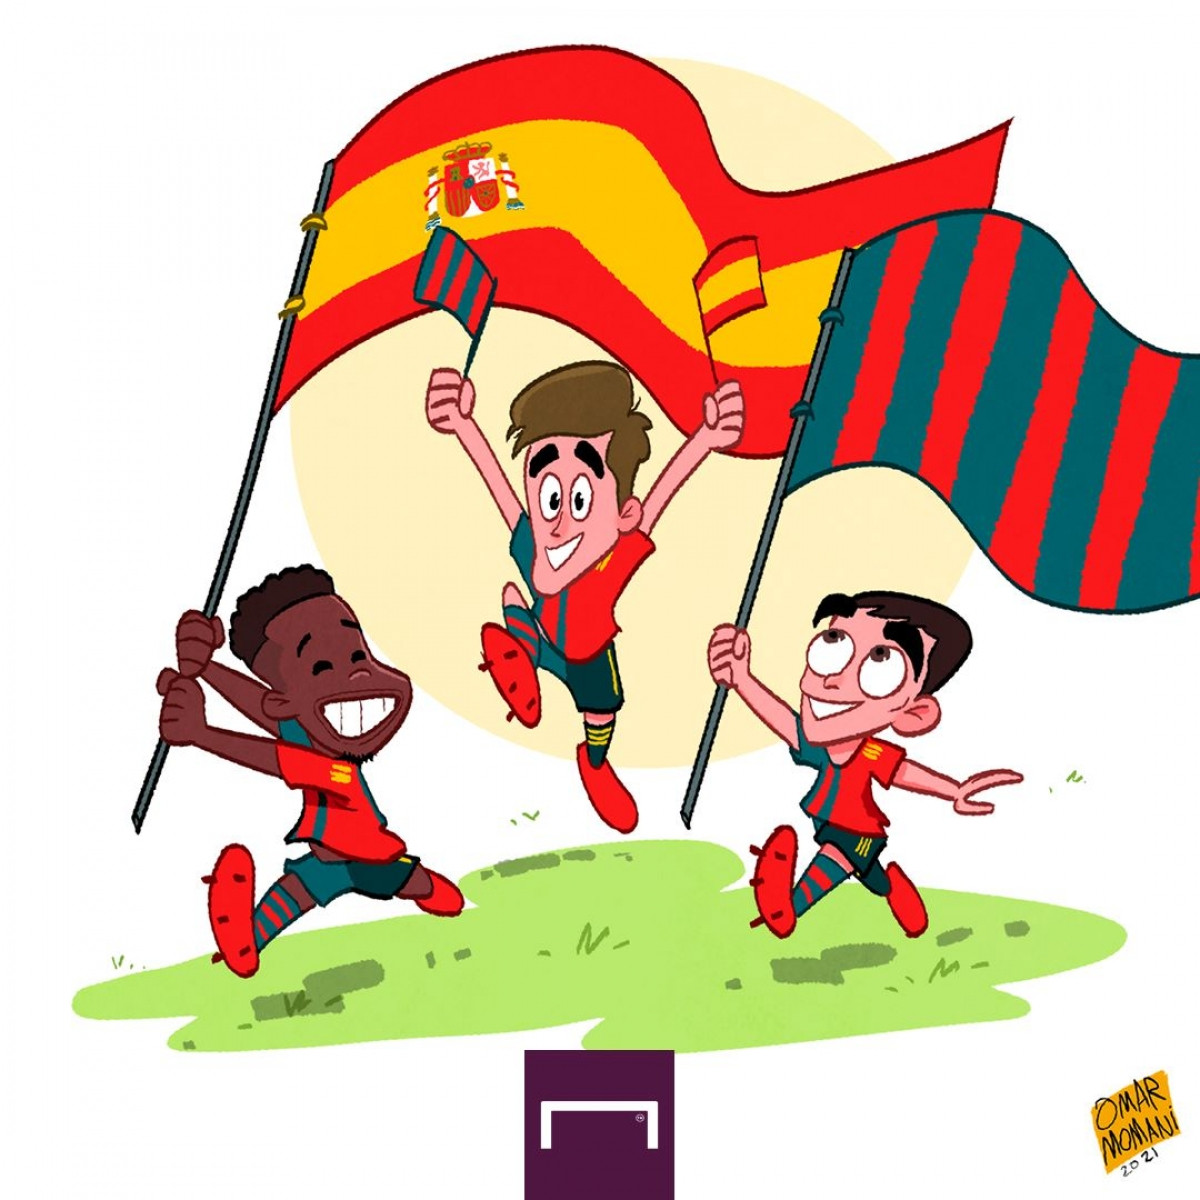 Bộ ba Gavi, Ansu Fati, Pedri vừa là tương lai của Barca, vừa là tương lai của ĐT Tây Ban Nha. (Ảnh: Omar Momani)